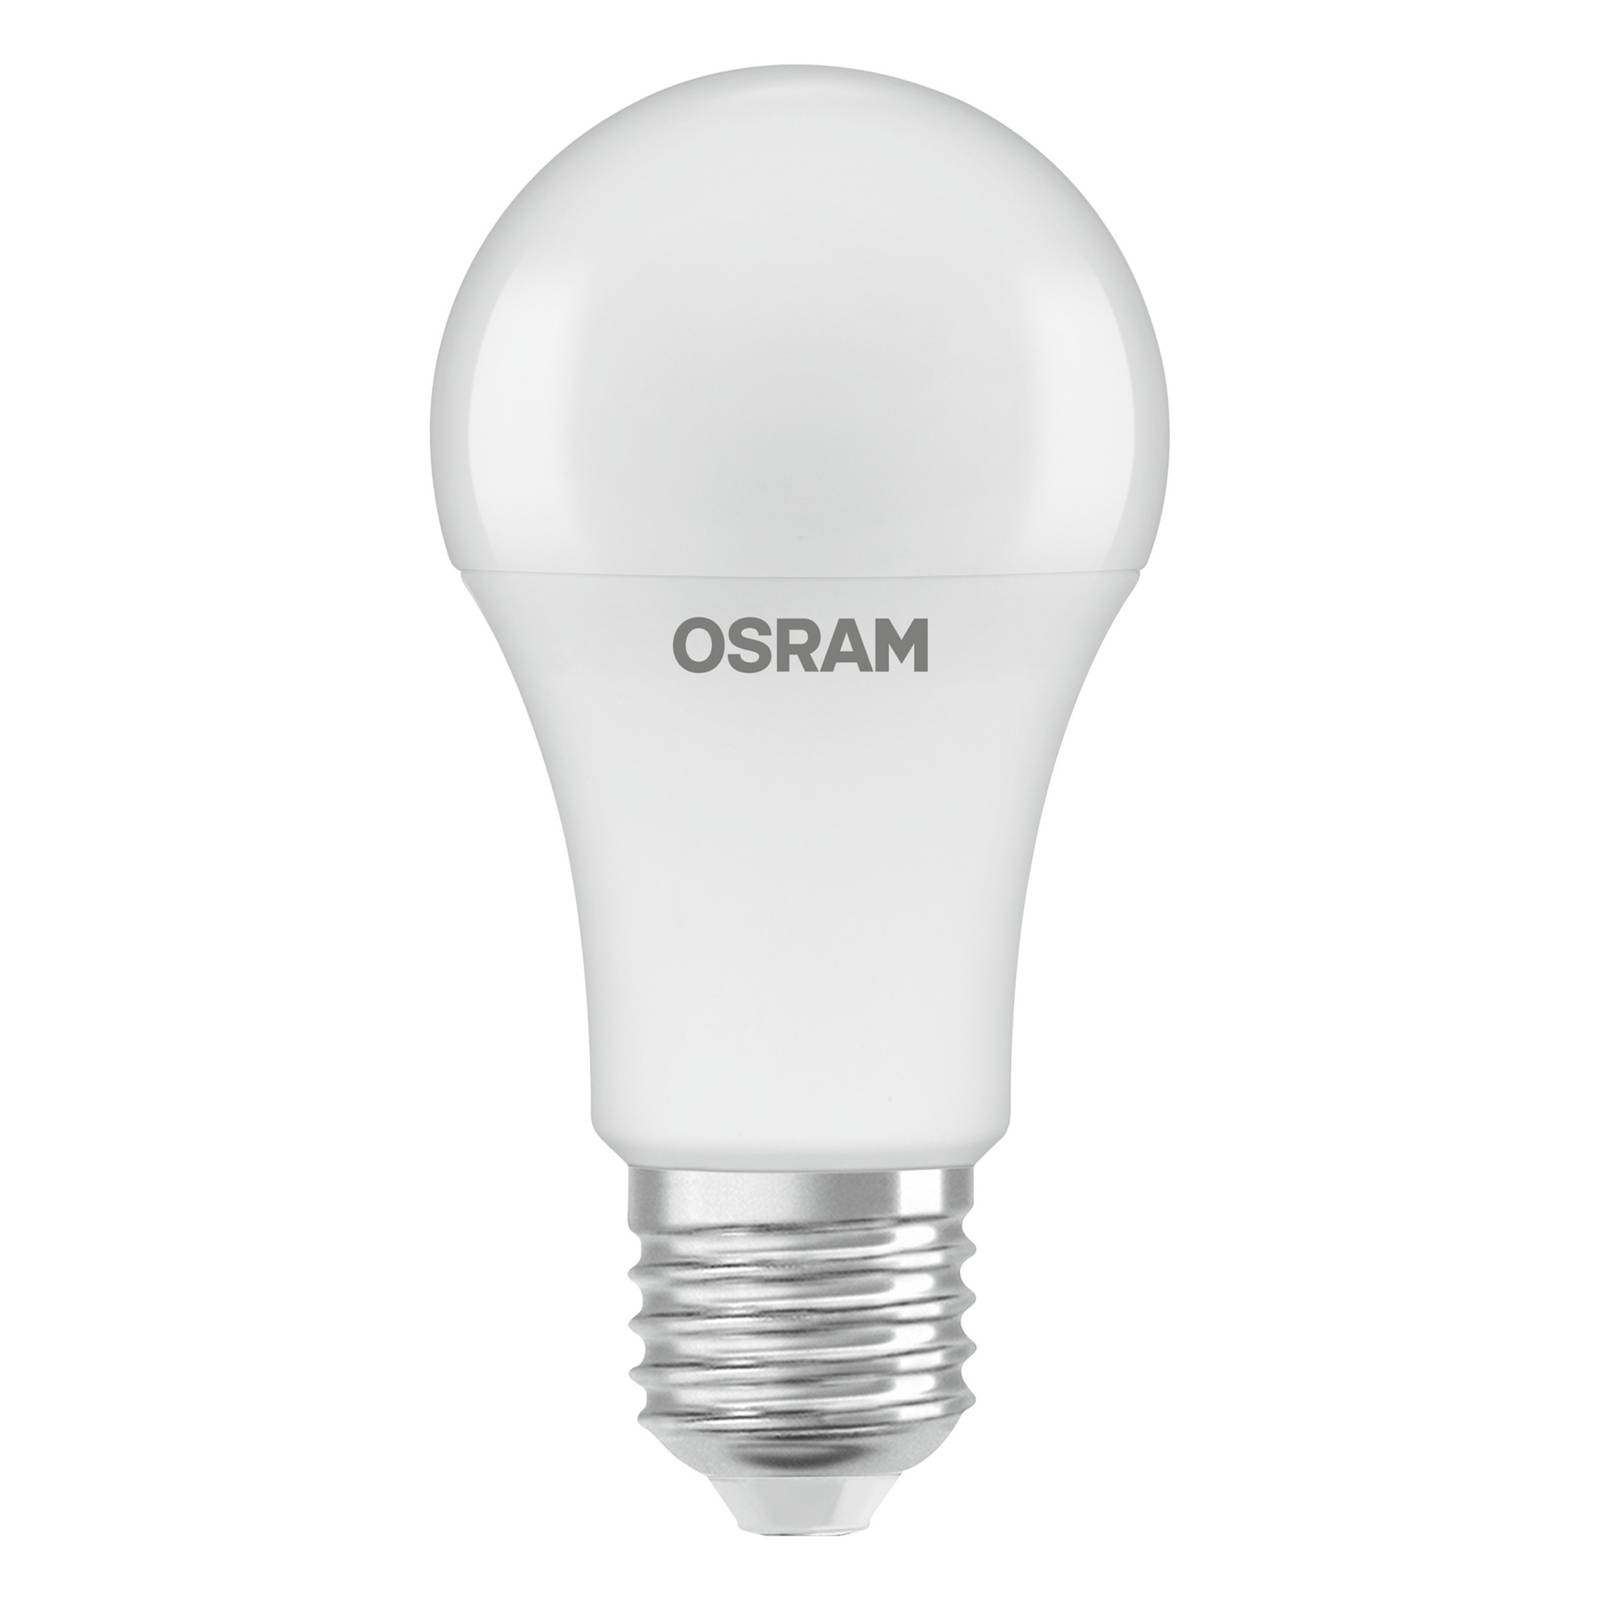 OSRAM LED lámpa E27 8,8W 827, nappali fényérzékelő